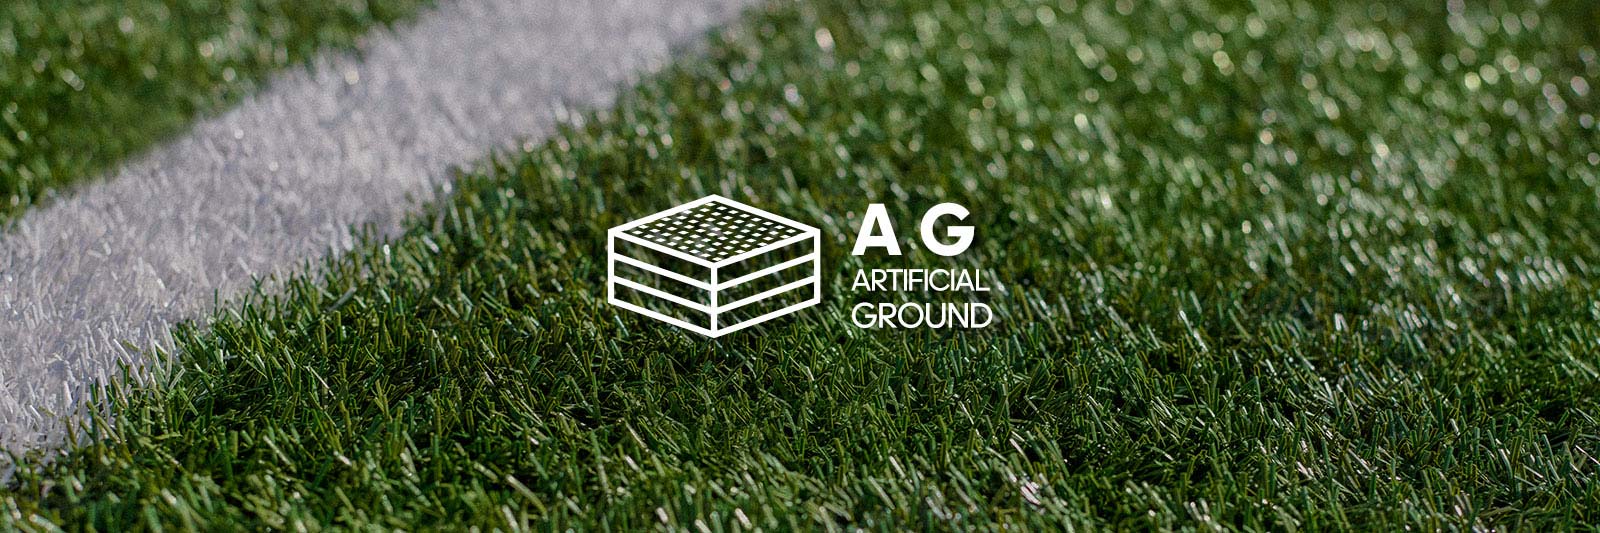 adidas artificial ground